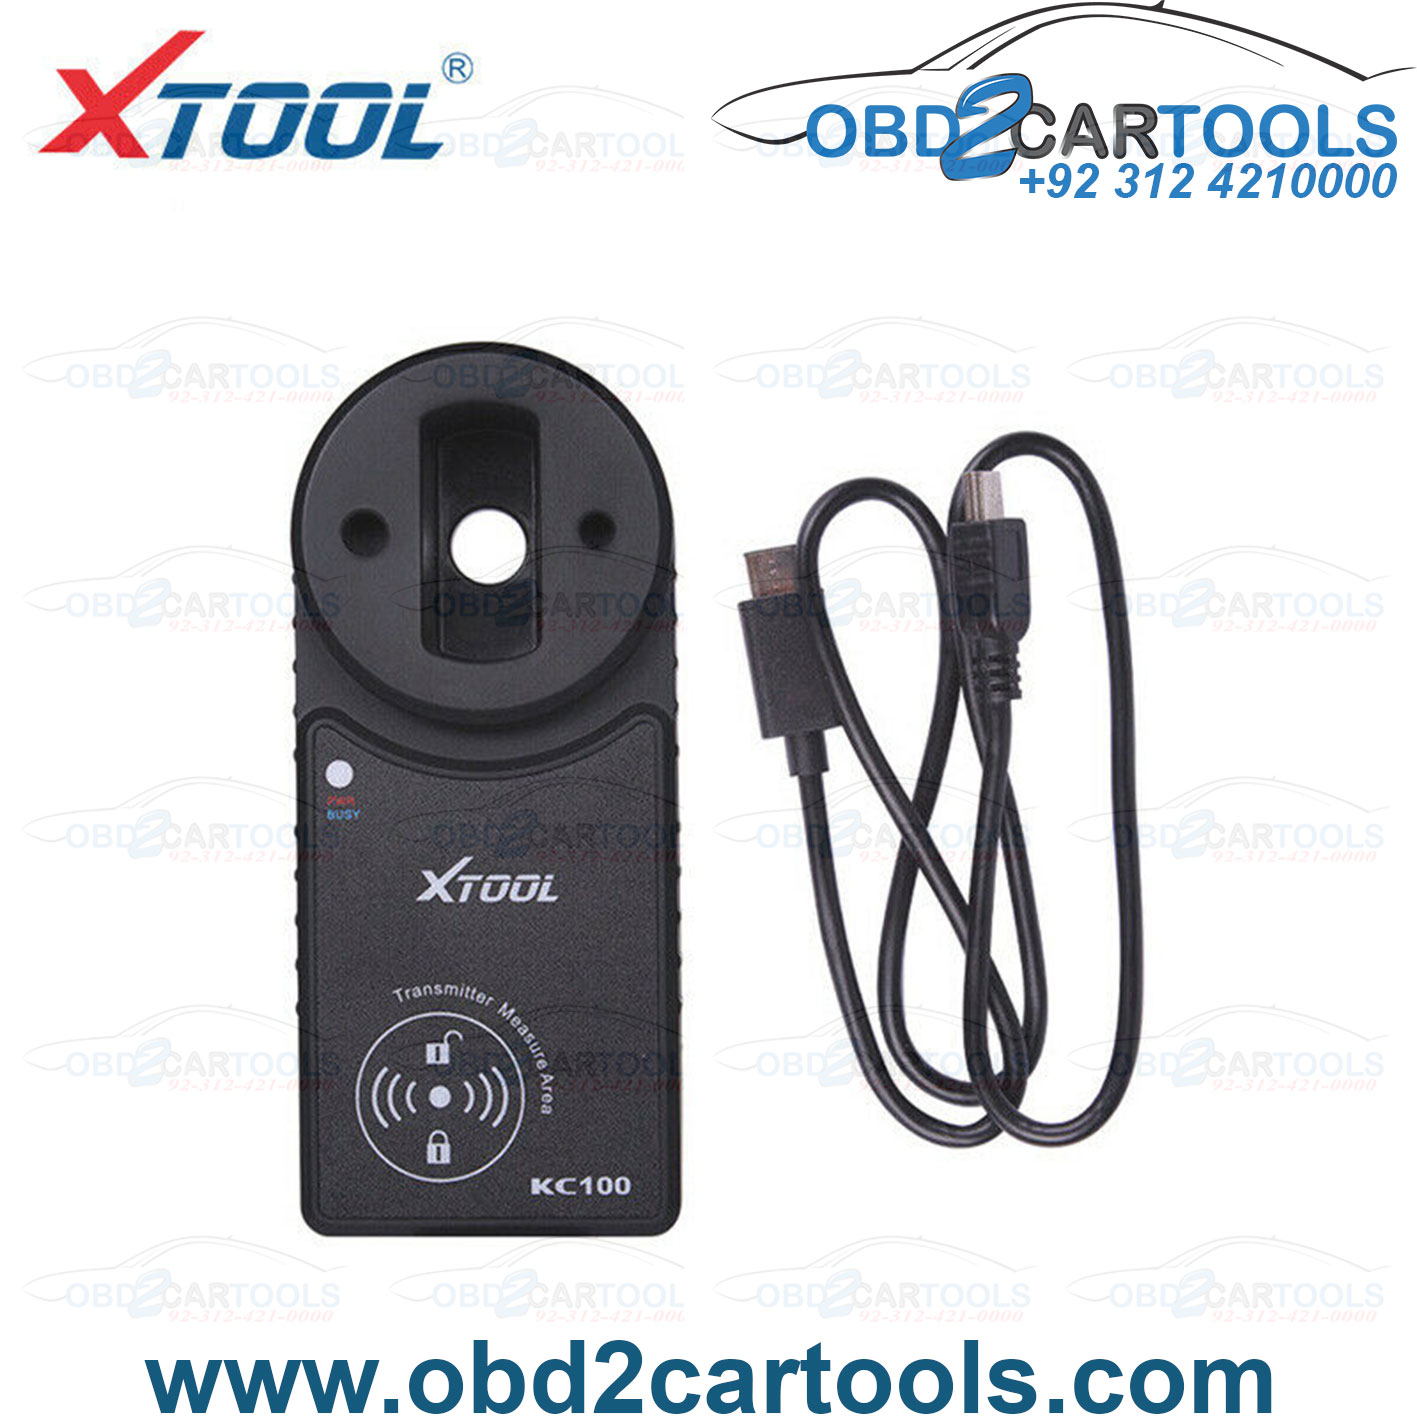 Product image for XTOOL KC100 KEY PROGRAMMER KC100 For X100 PADELITE / PAD2 KEY PROGRAMMER